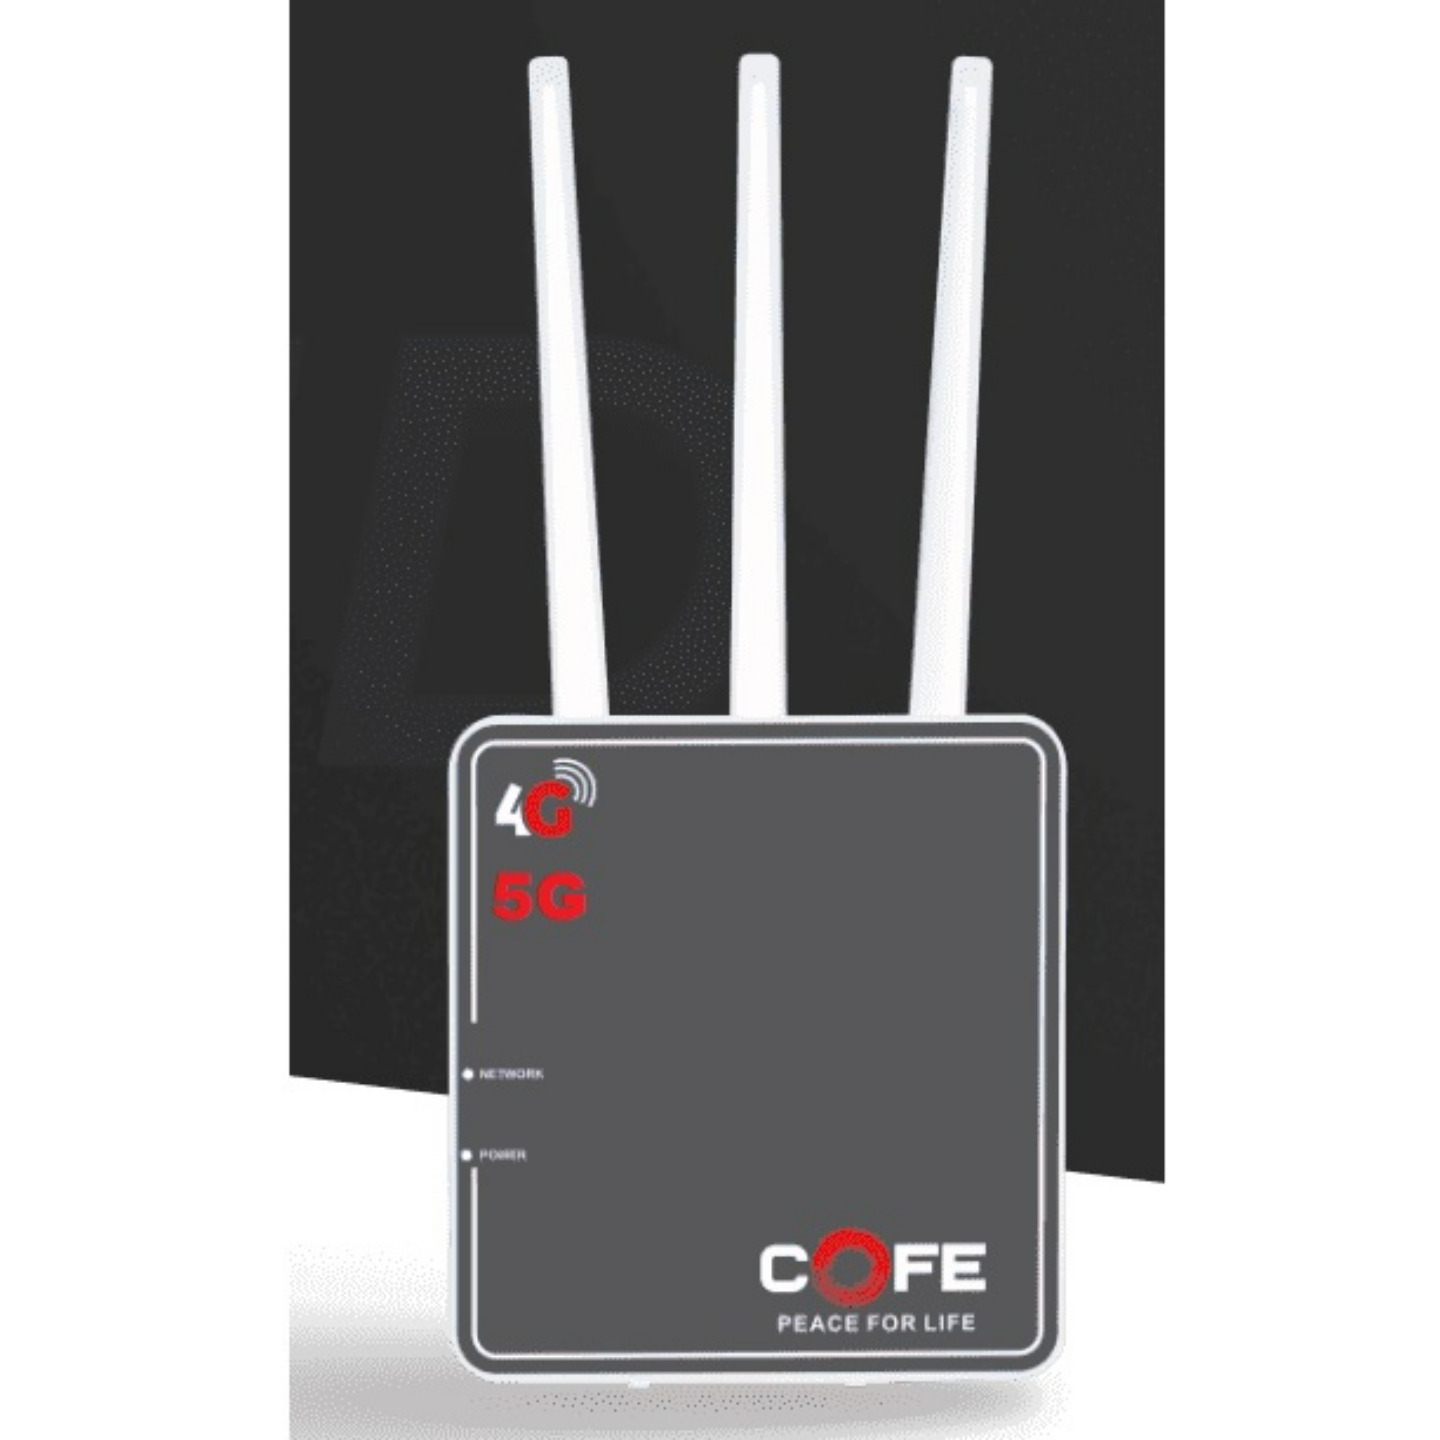 COFE 4G  5G WiFi Router supports all 4G5G SIM cards - Jio, Airtel, VI, BSNL